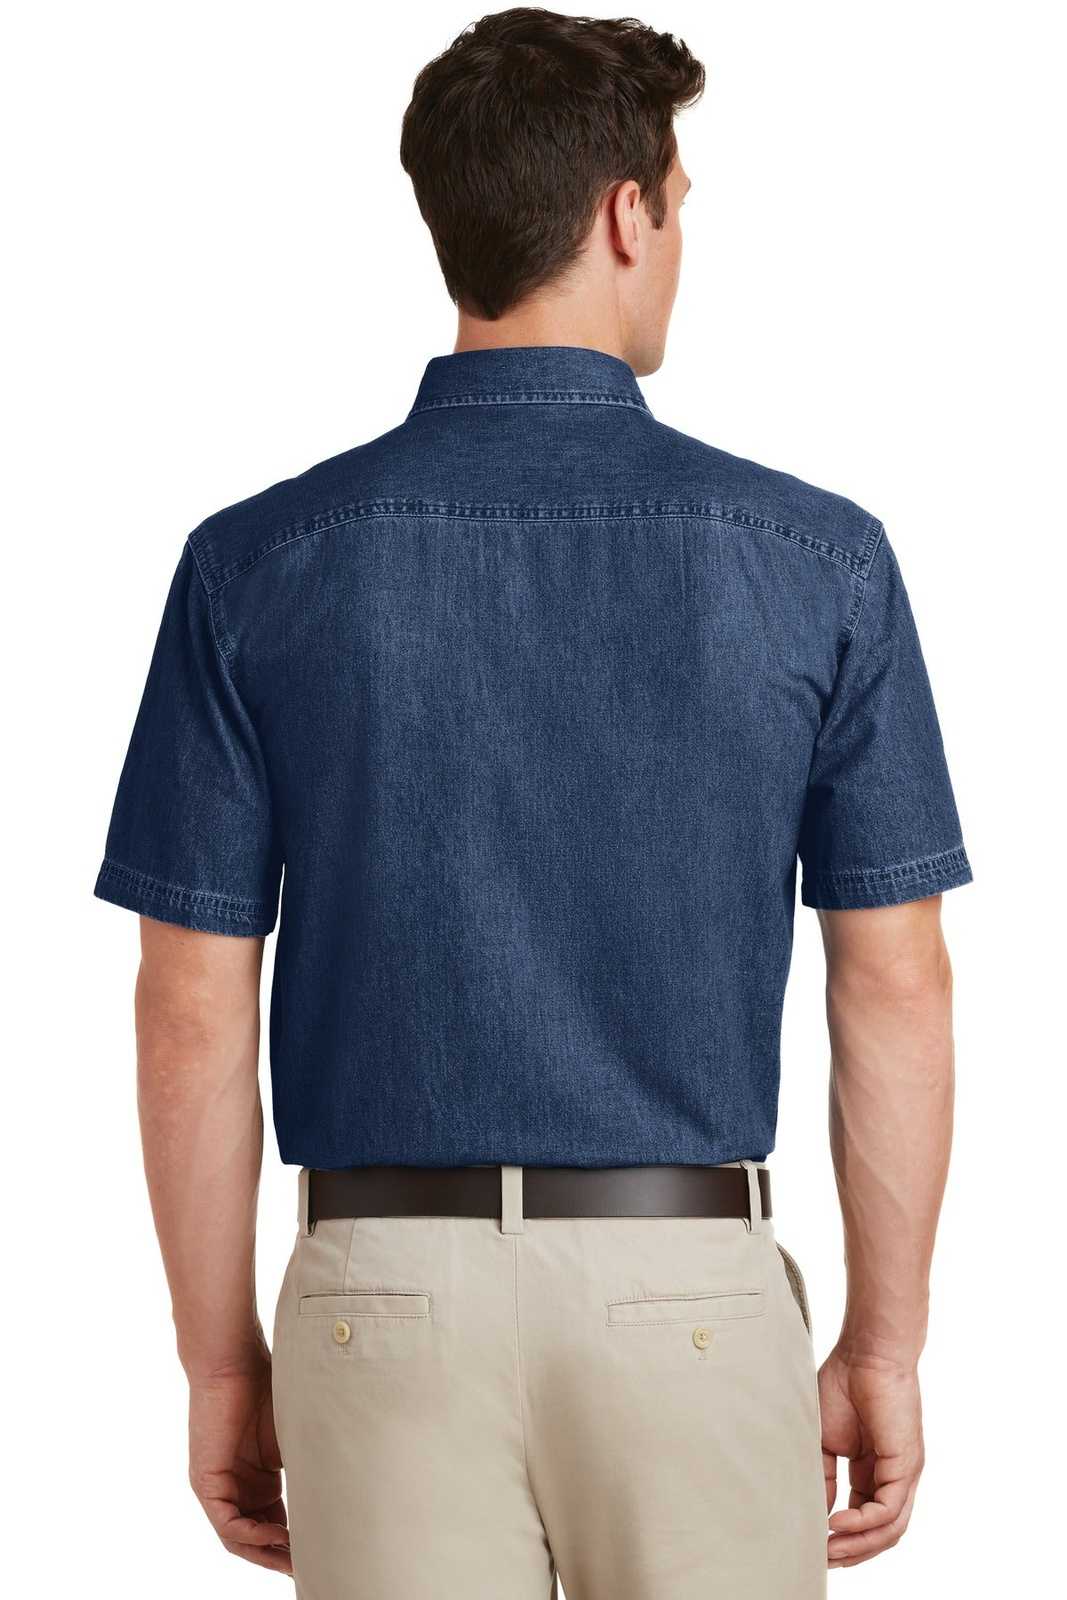 Port & Company SP11 Short Sleeve Value Denim Shirt - Ink Blue - HIT a Double - 1